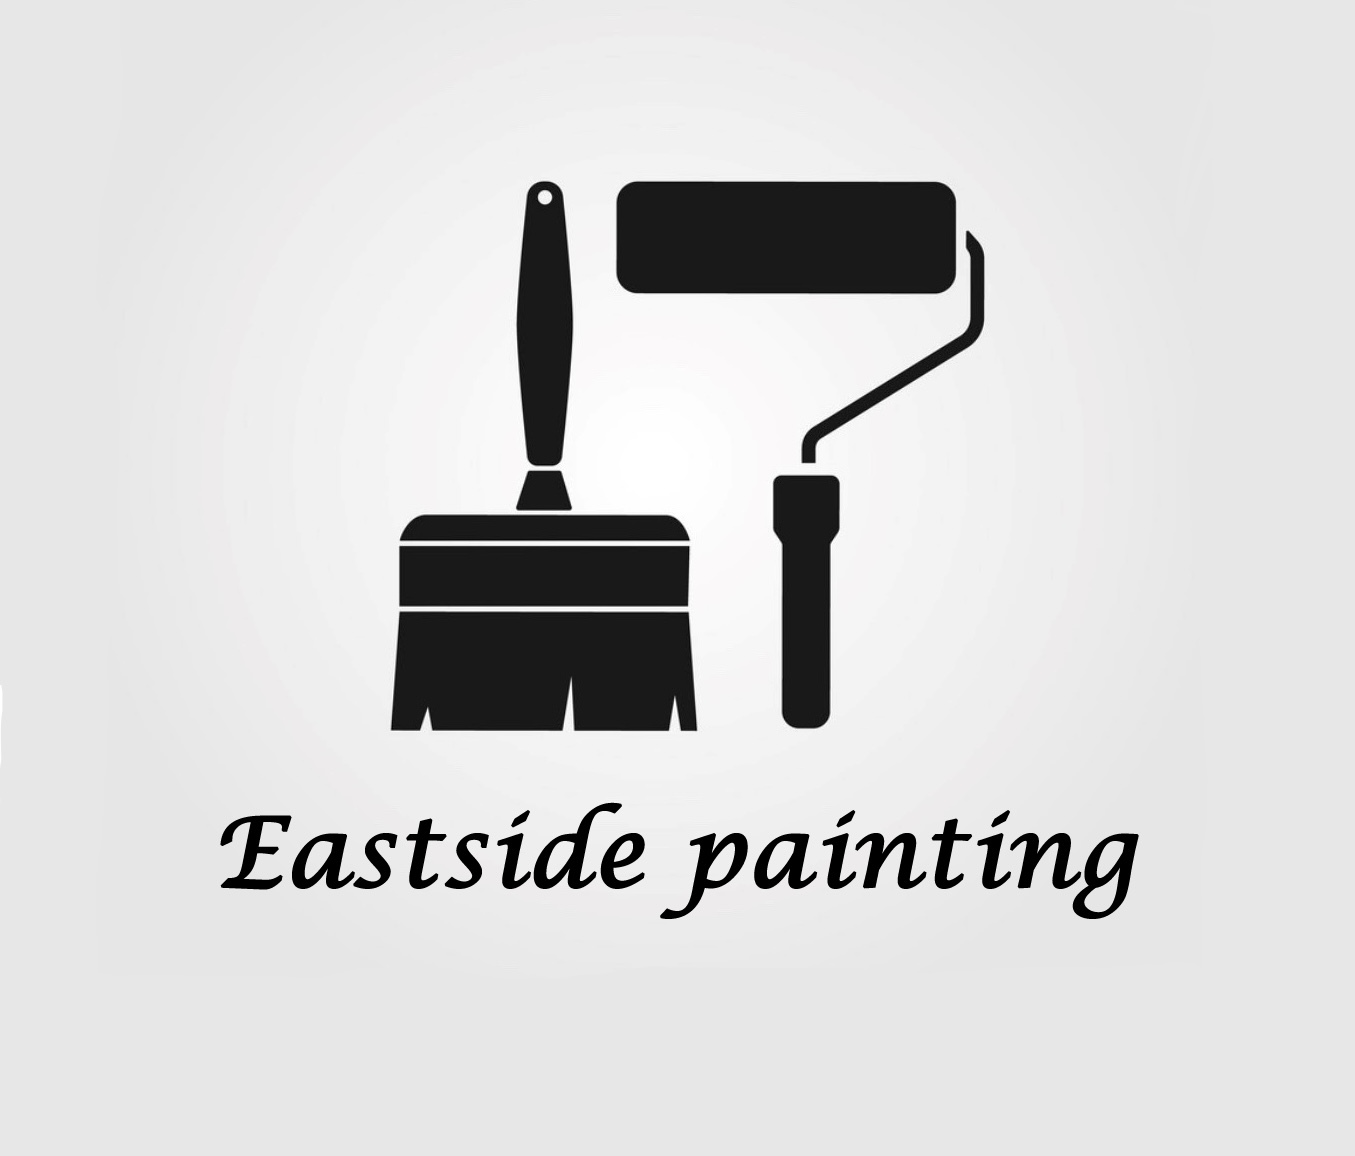 Eastside painting company 's logo